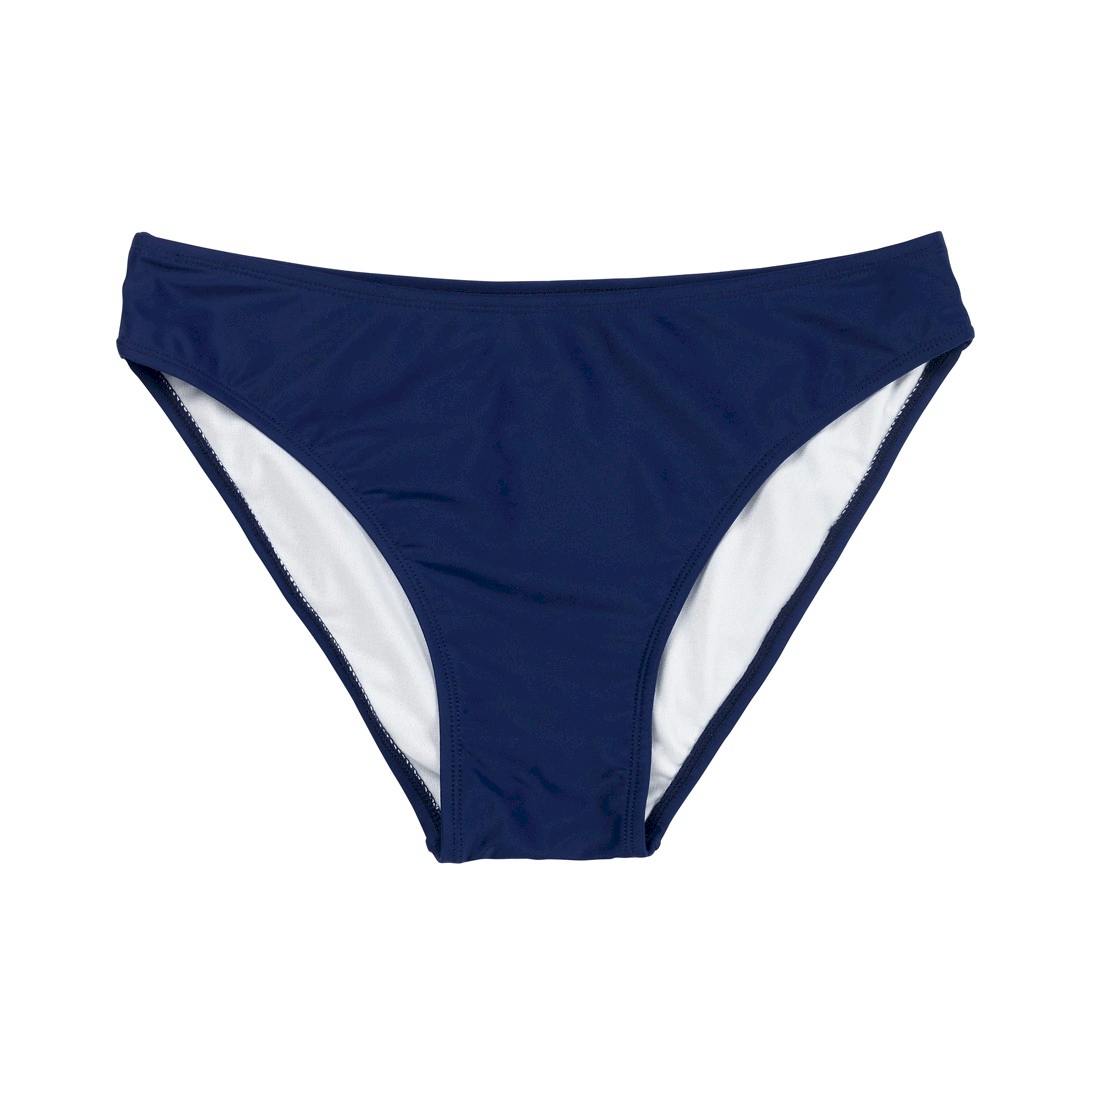 Bikini Swimsuit Bottom Embroidery Blanks - NAVY - CLOSEOUT